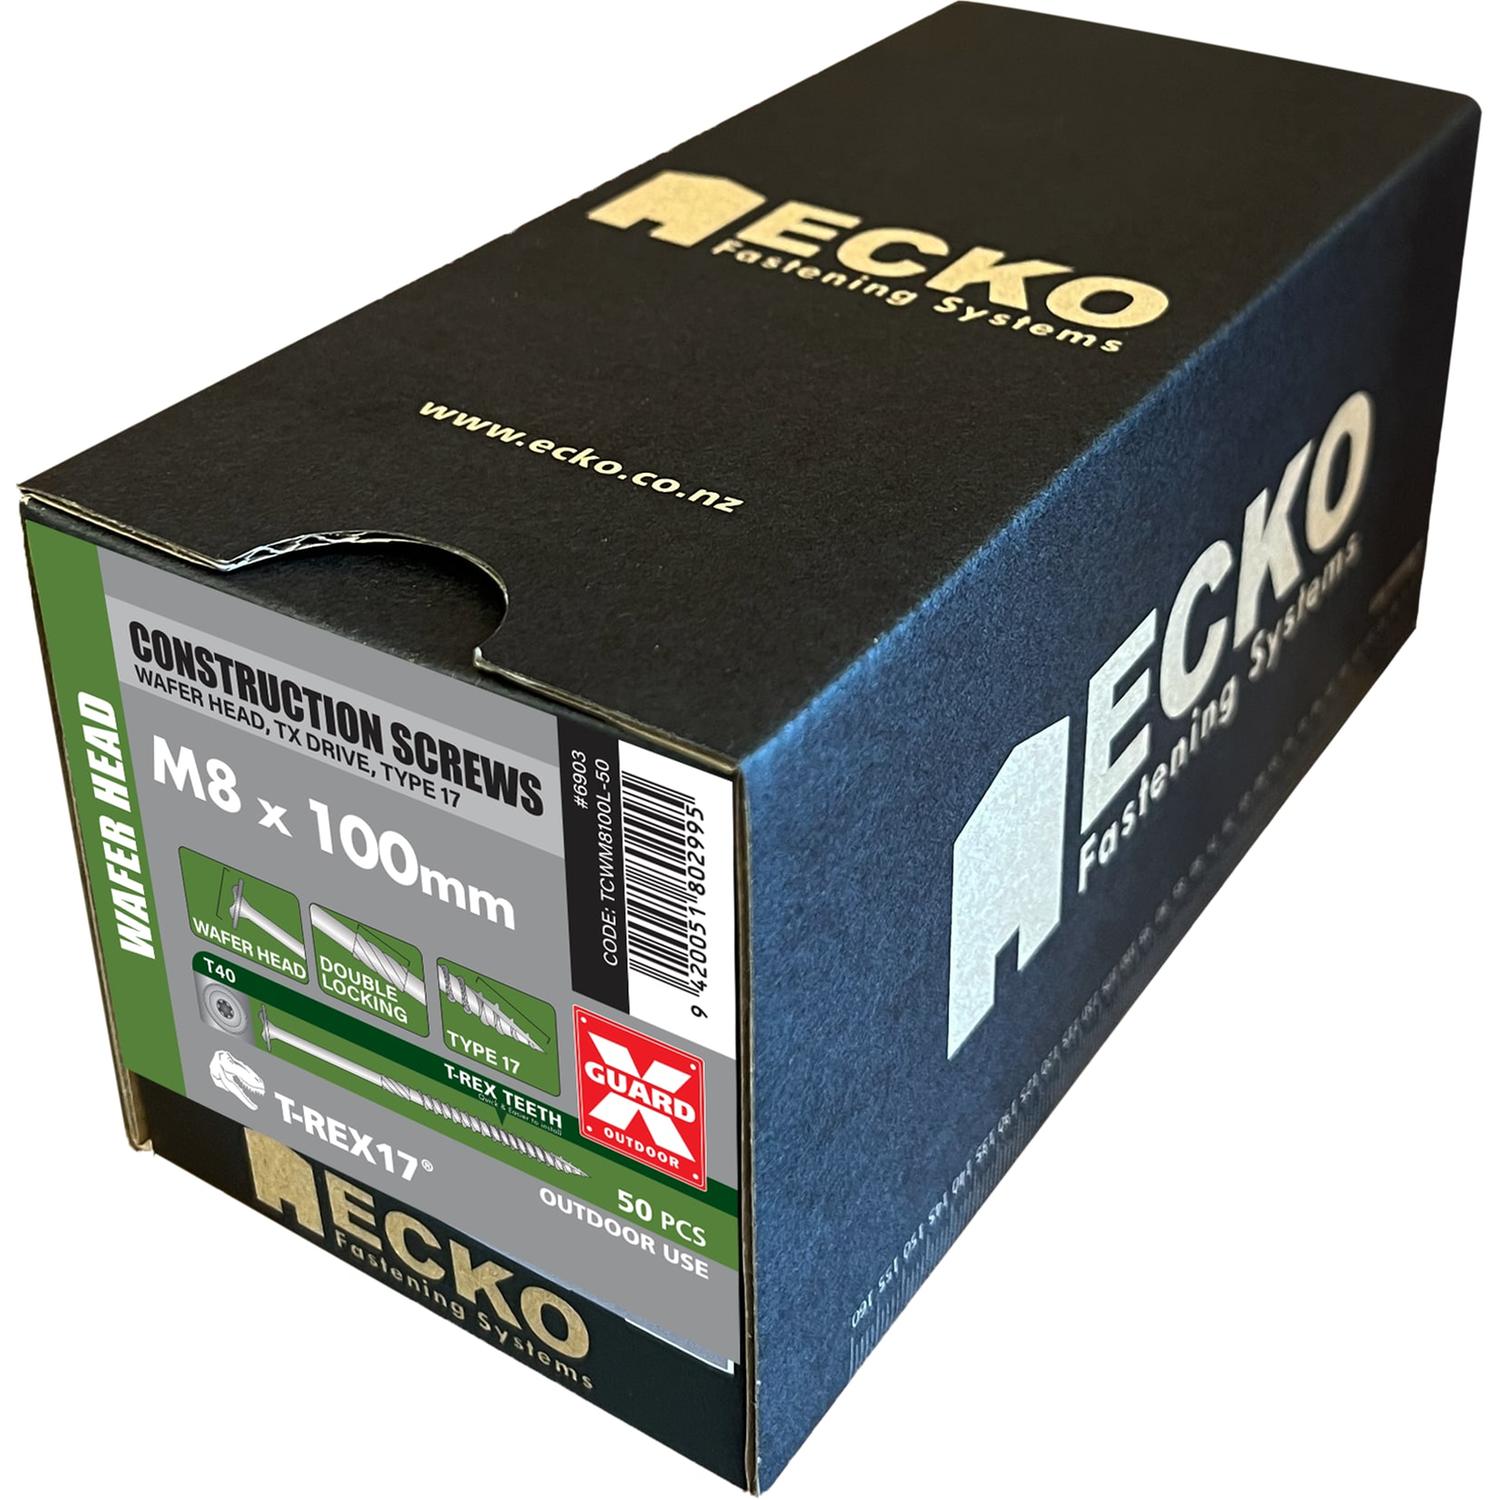 Ecko T-Rex17 Wafer Head Construction Screws M8 X 100Mm (500 Pack)